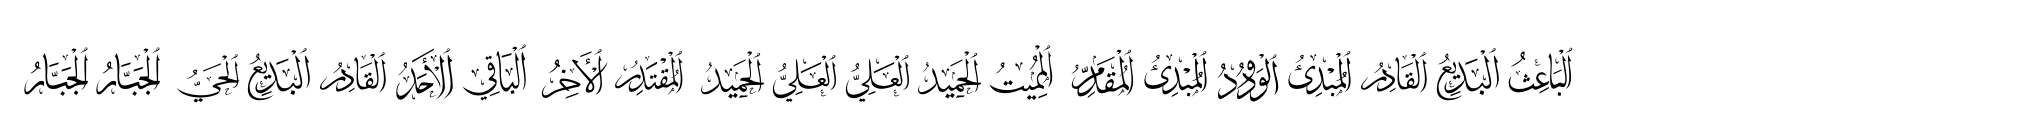 99 Names of ALLAH Minimal image